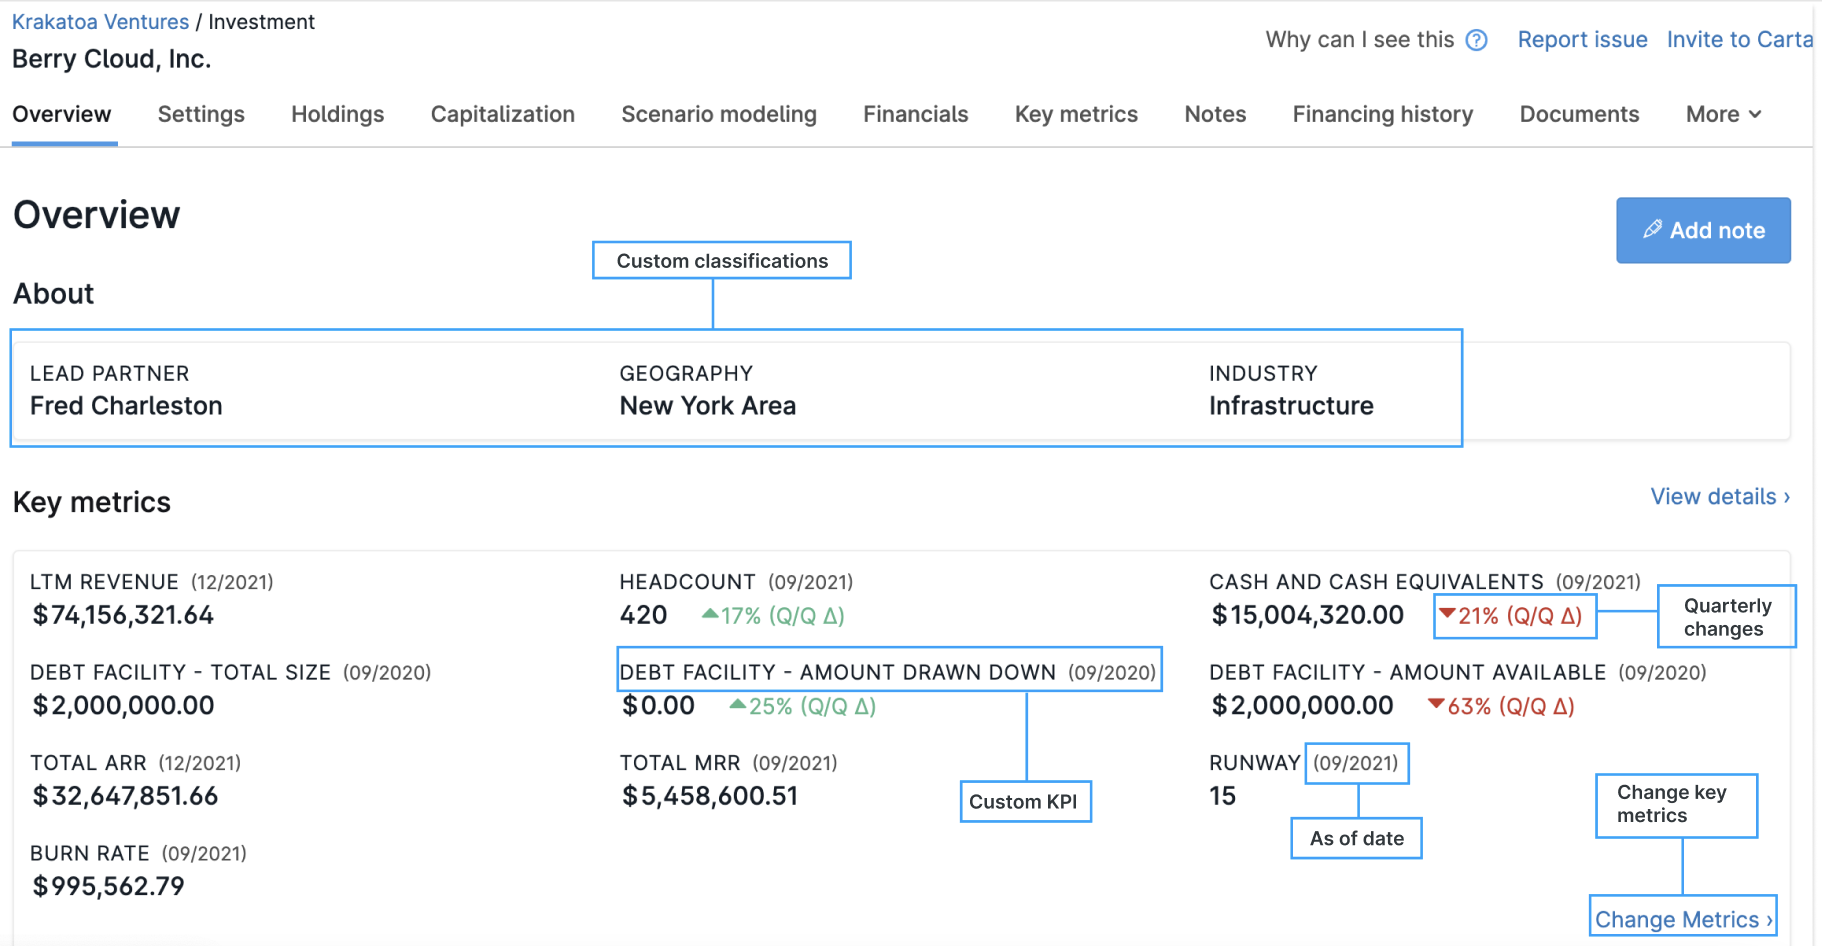 Screen view of custom KPIs